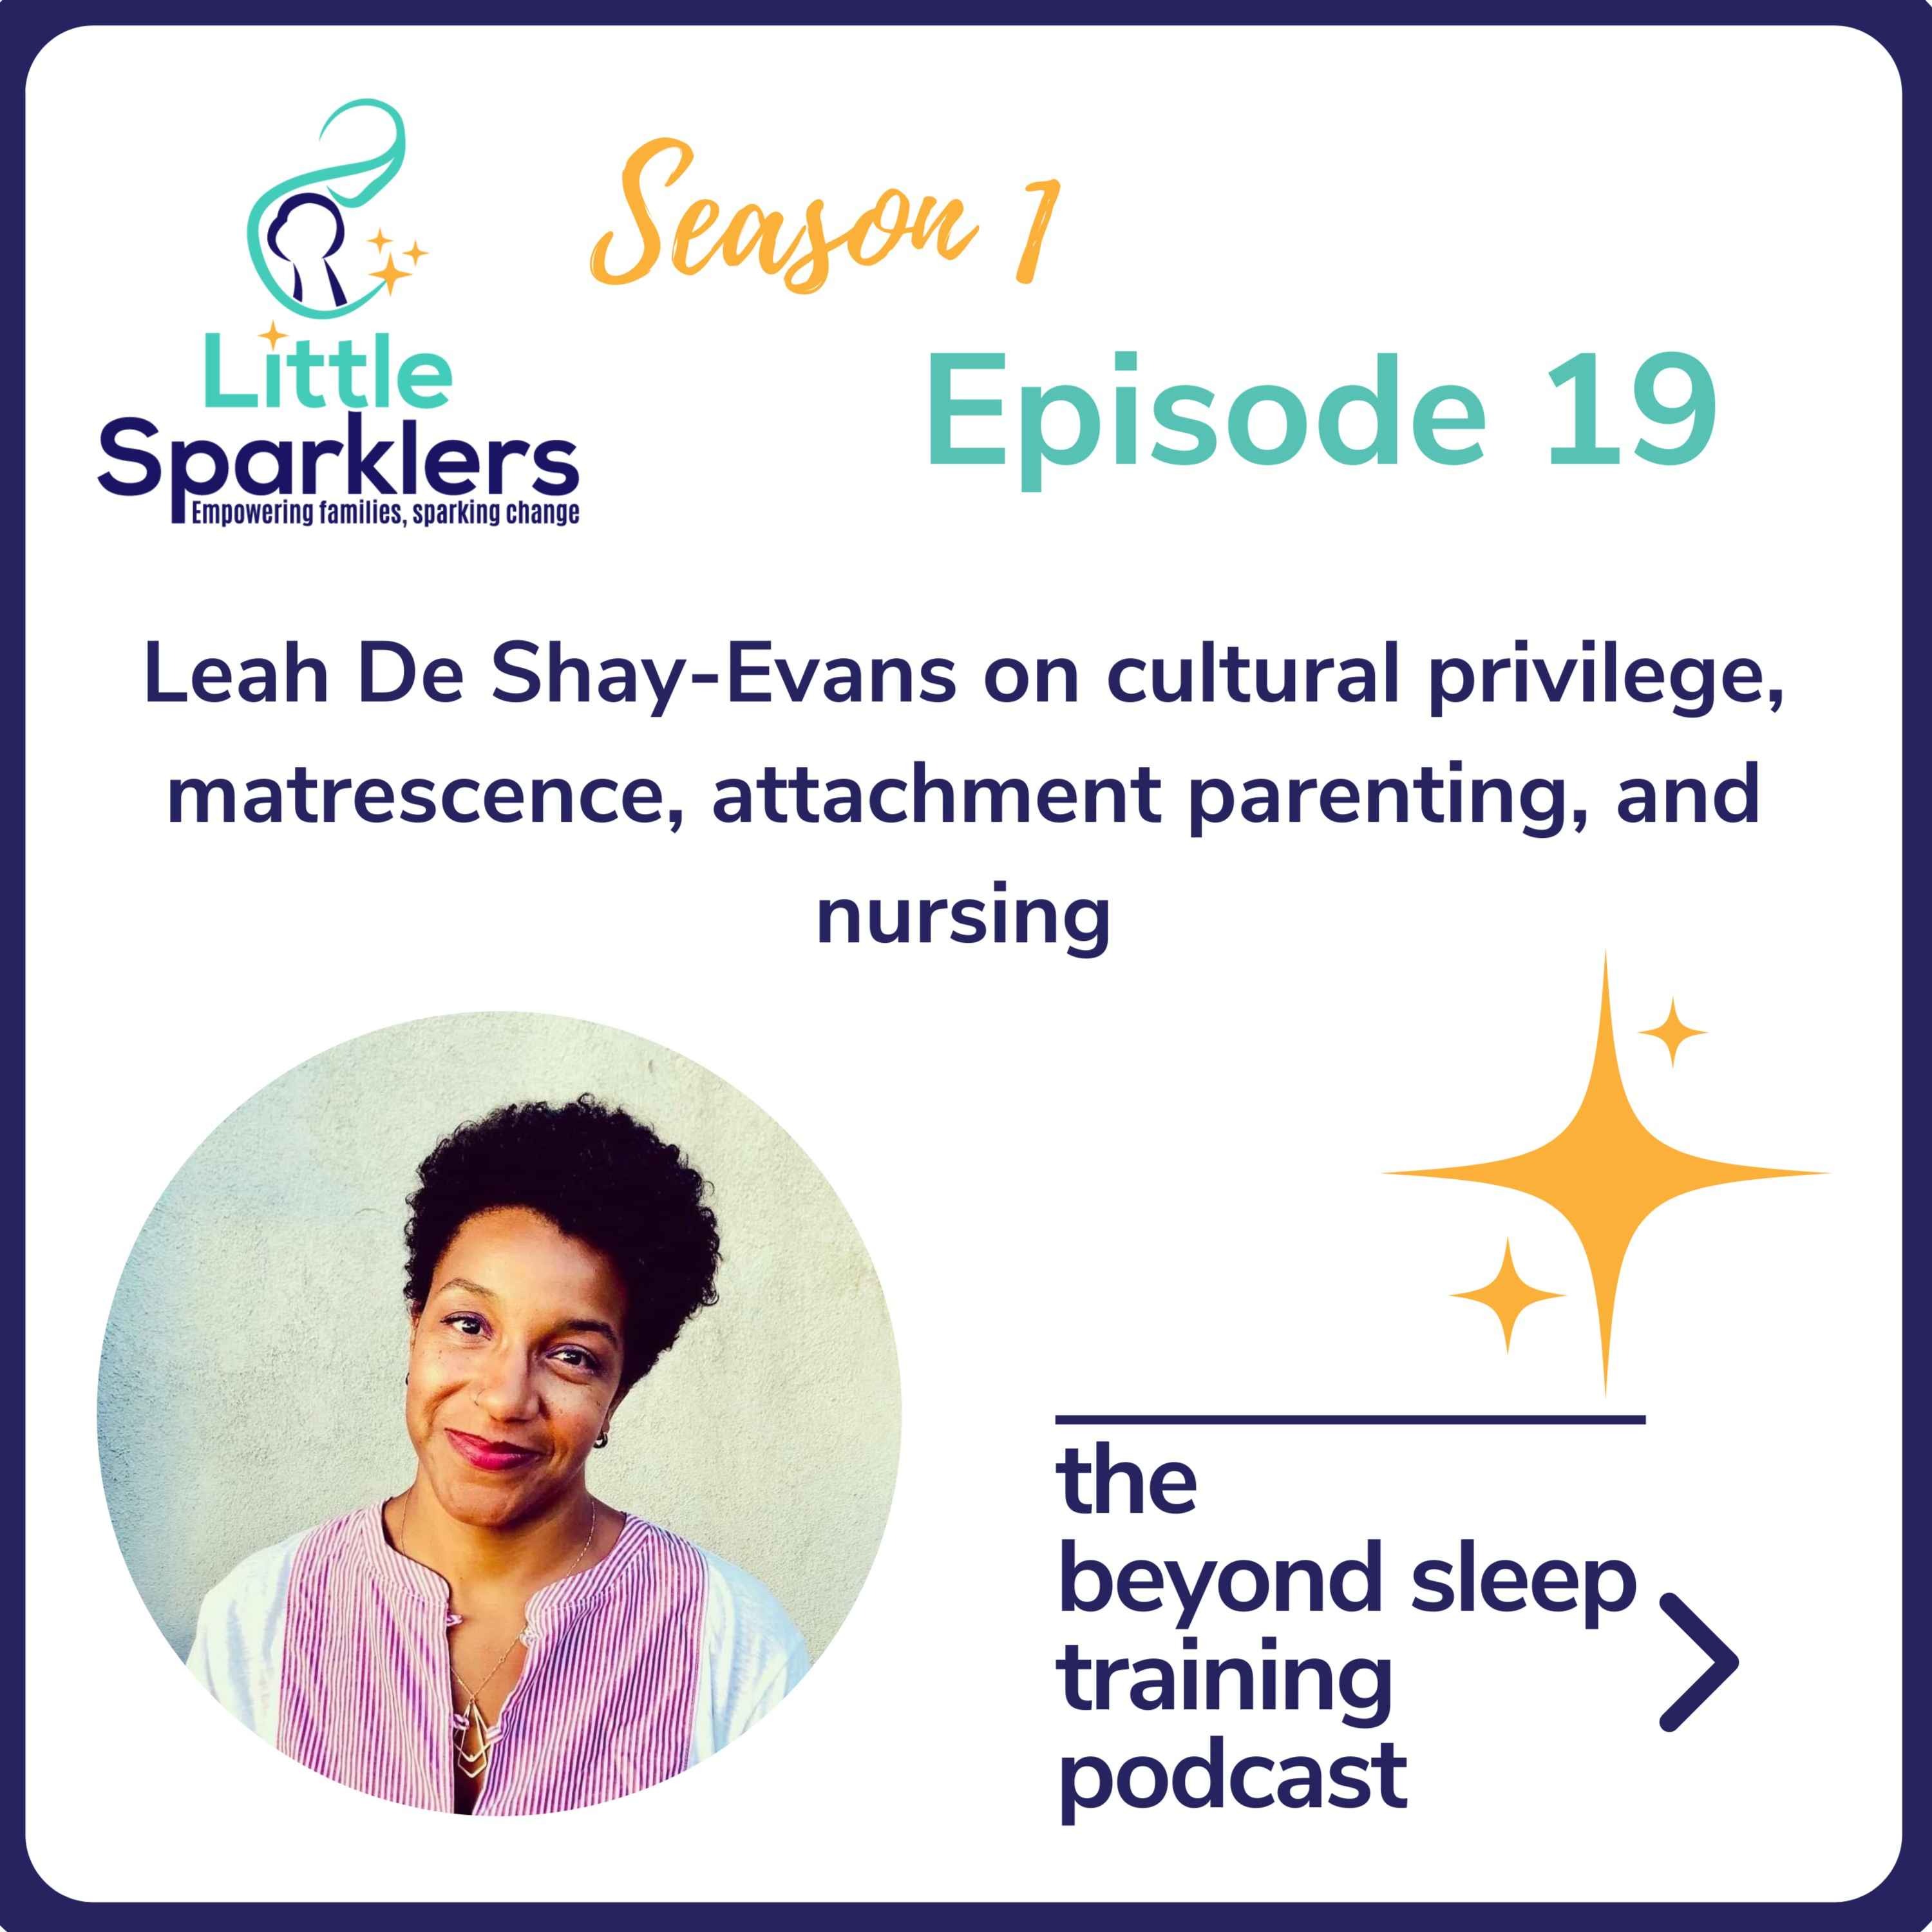 Leah De Shay-Evans on cultural privilege, matrescence, attachment parenting, and nursing